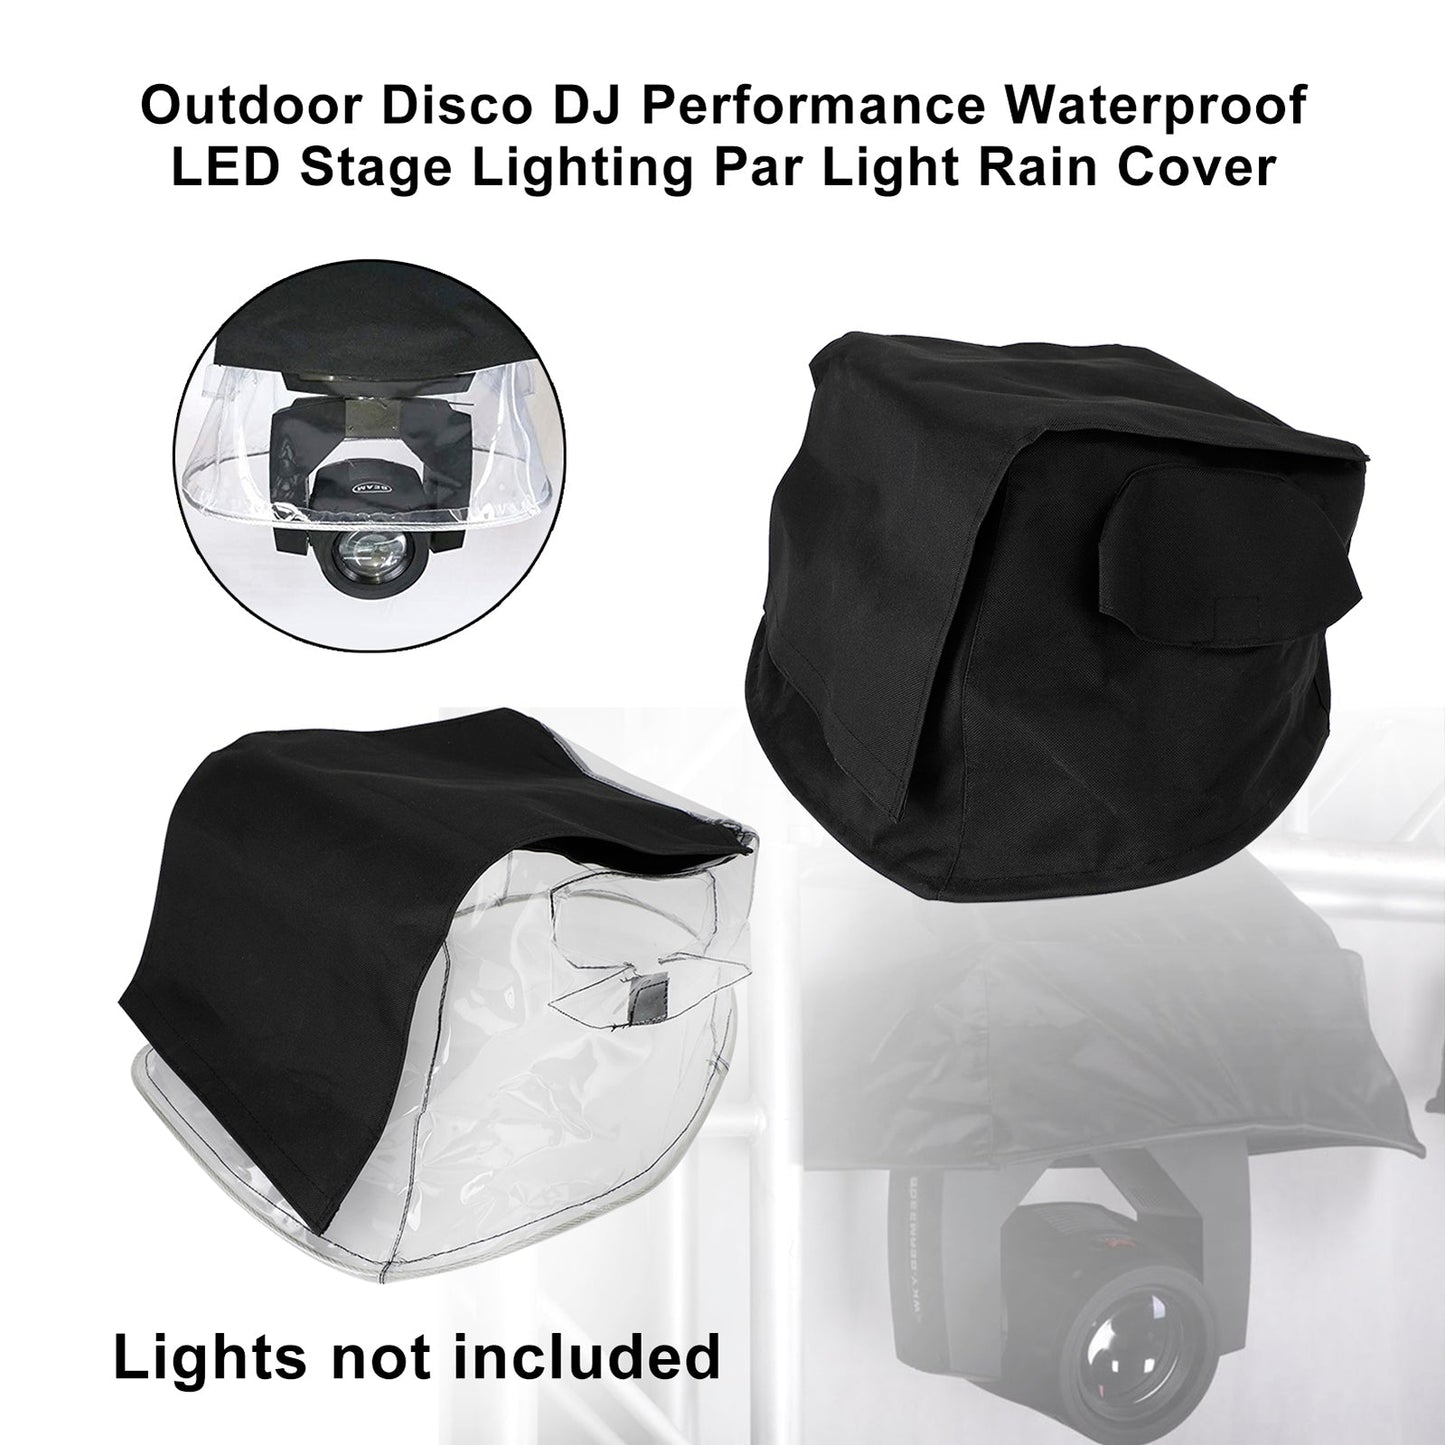 Outdoor Disco DJ Performance Waterproof LED Stage Lighting Par Light Rain Cover